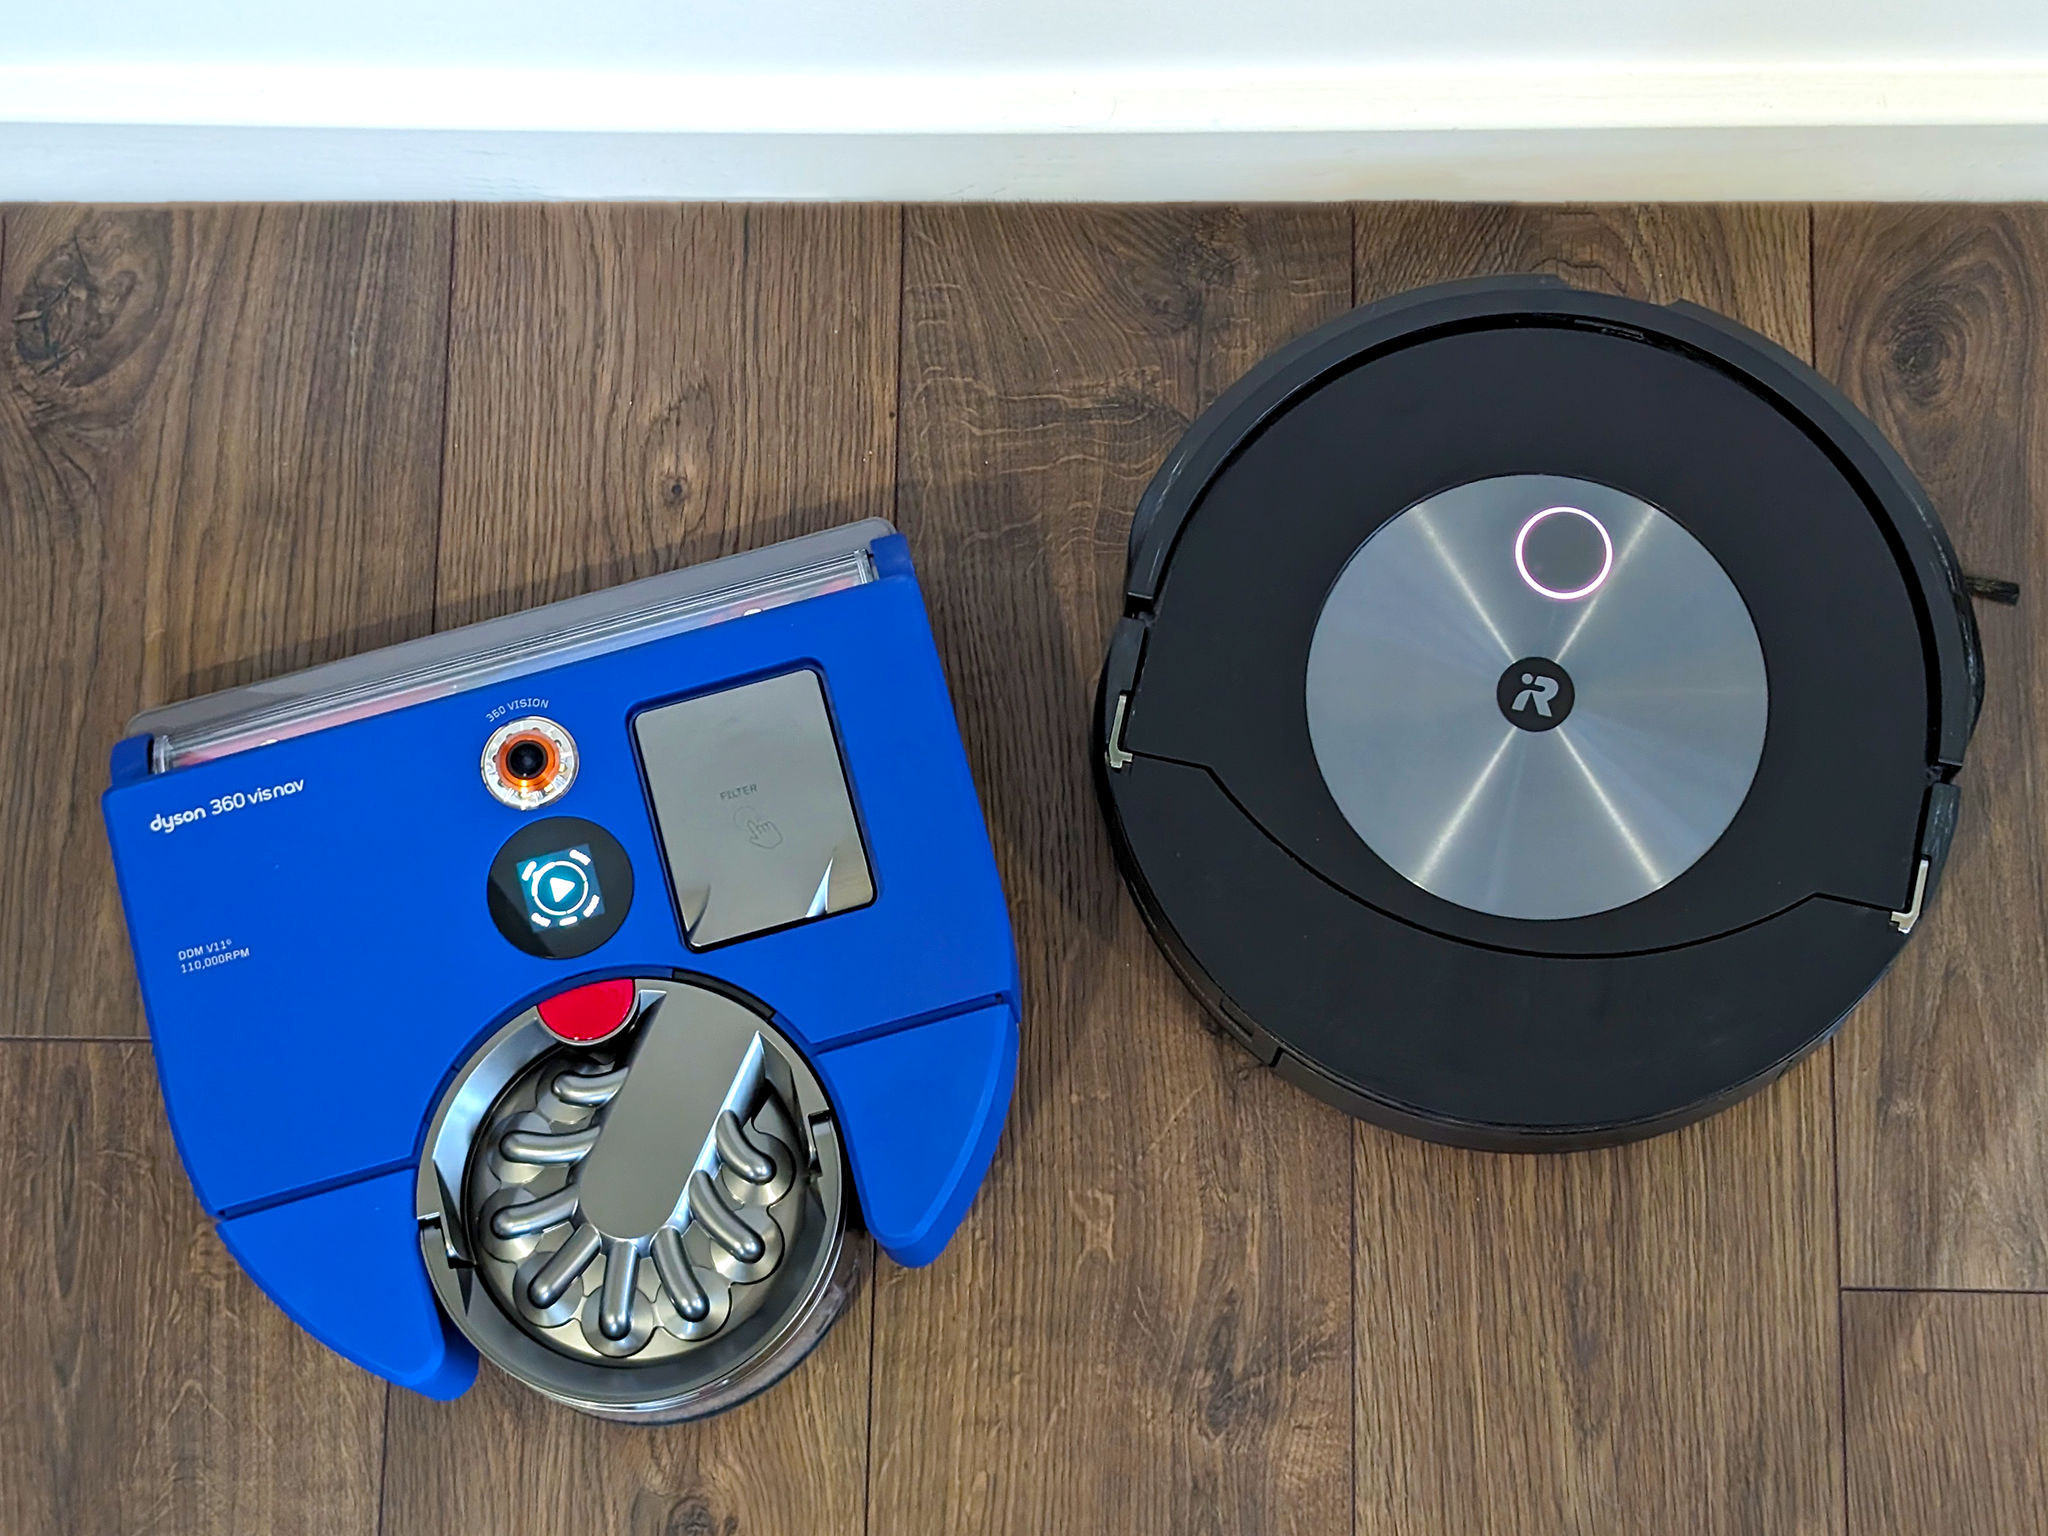 Roomba i7 - Robocleaners